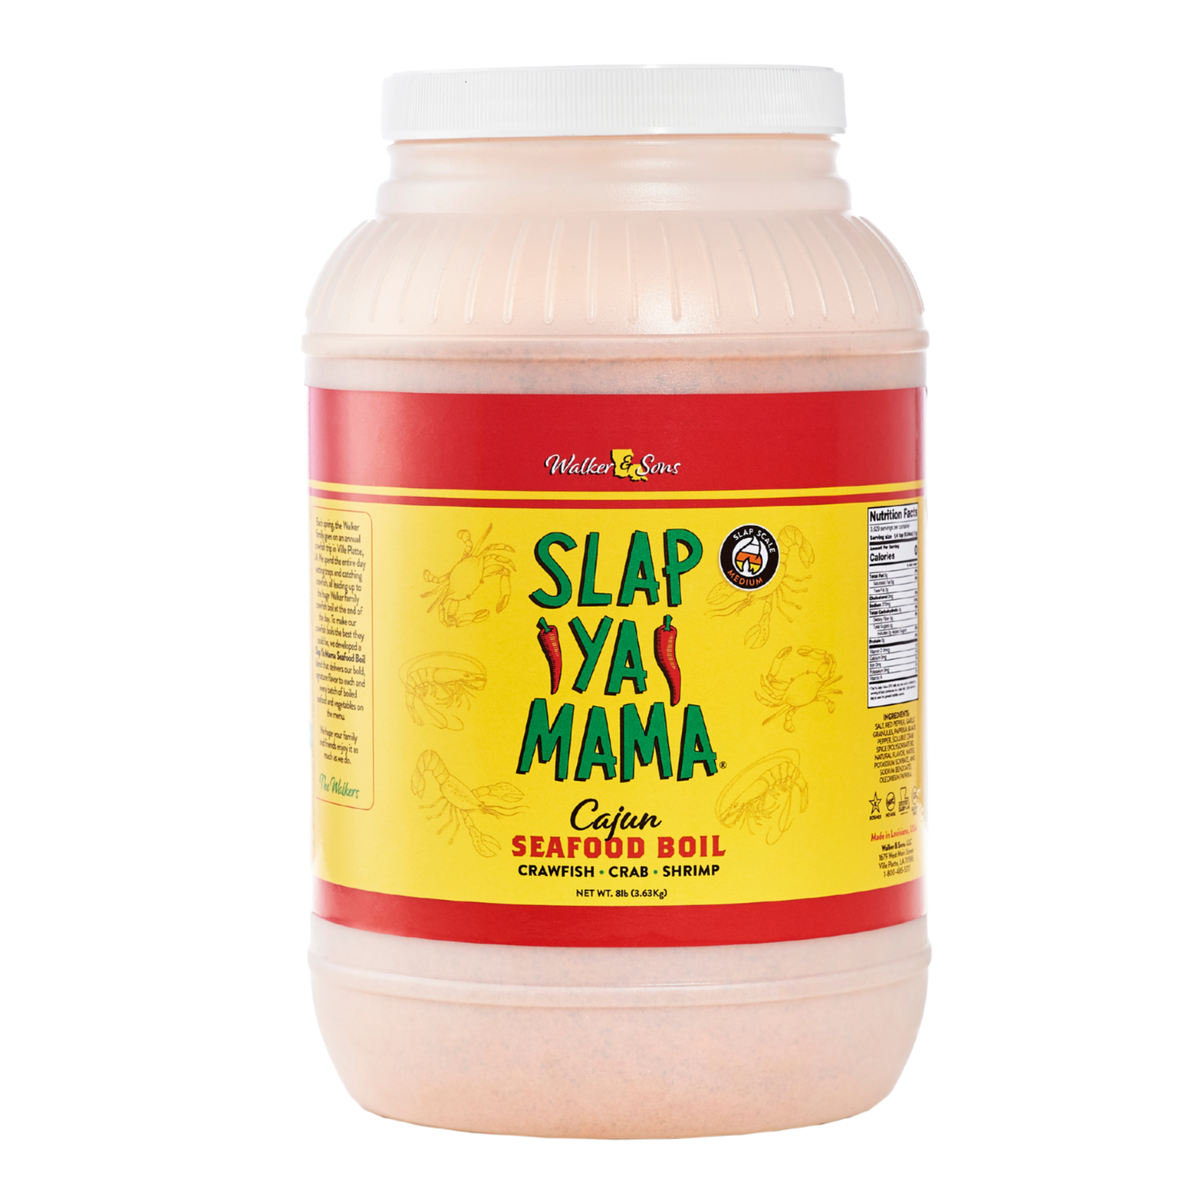 Slap Ya Mama Seafood Boil Cajun Seasoning - Shop Spice Mixes at H-E-B